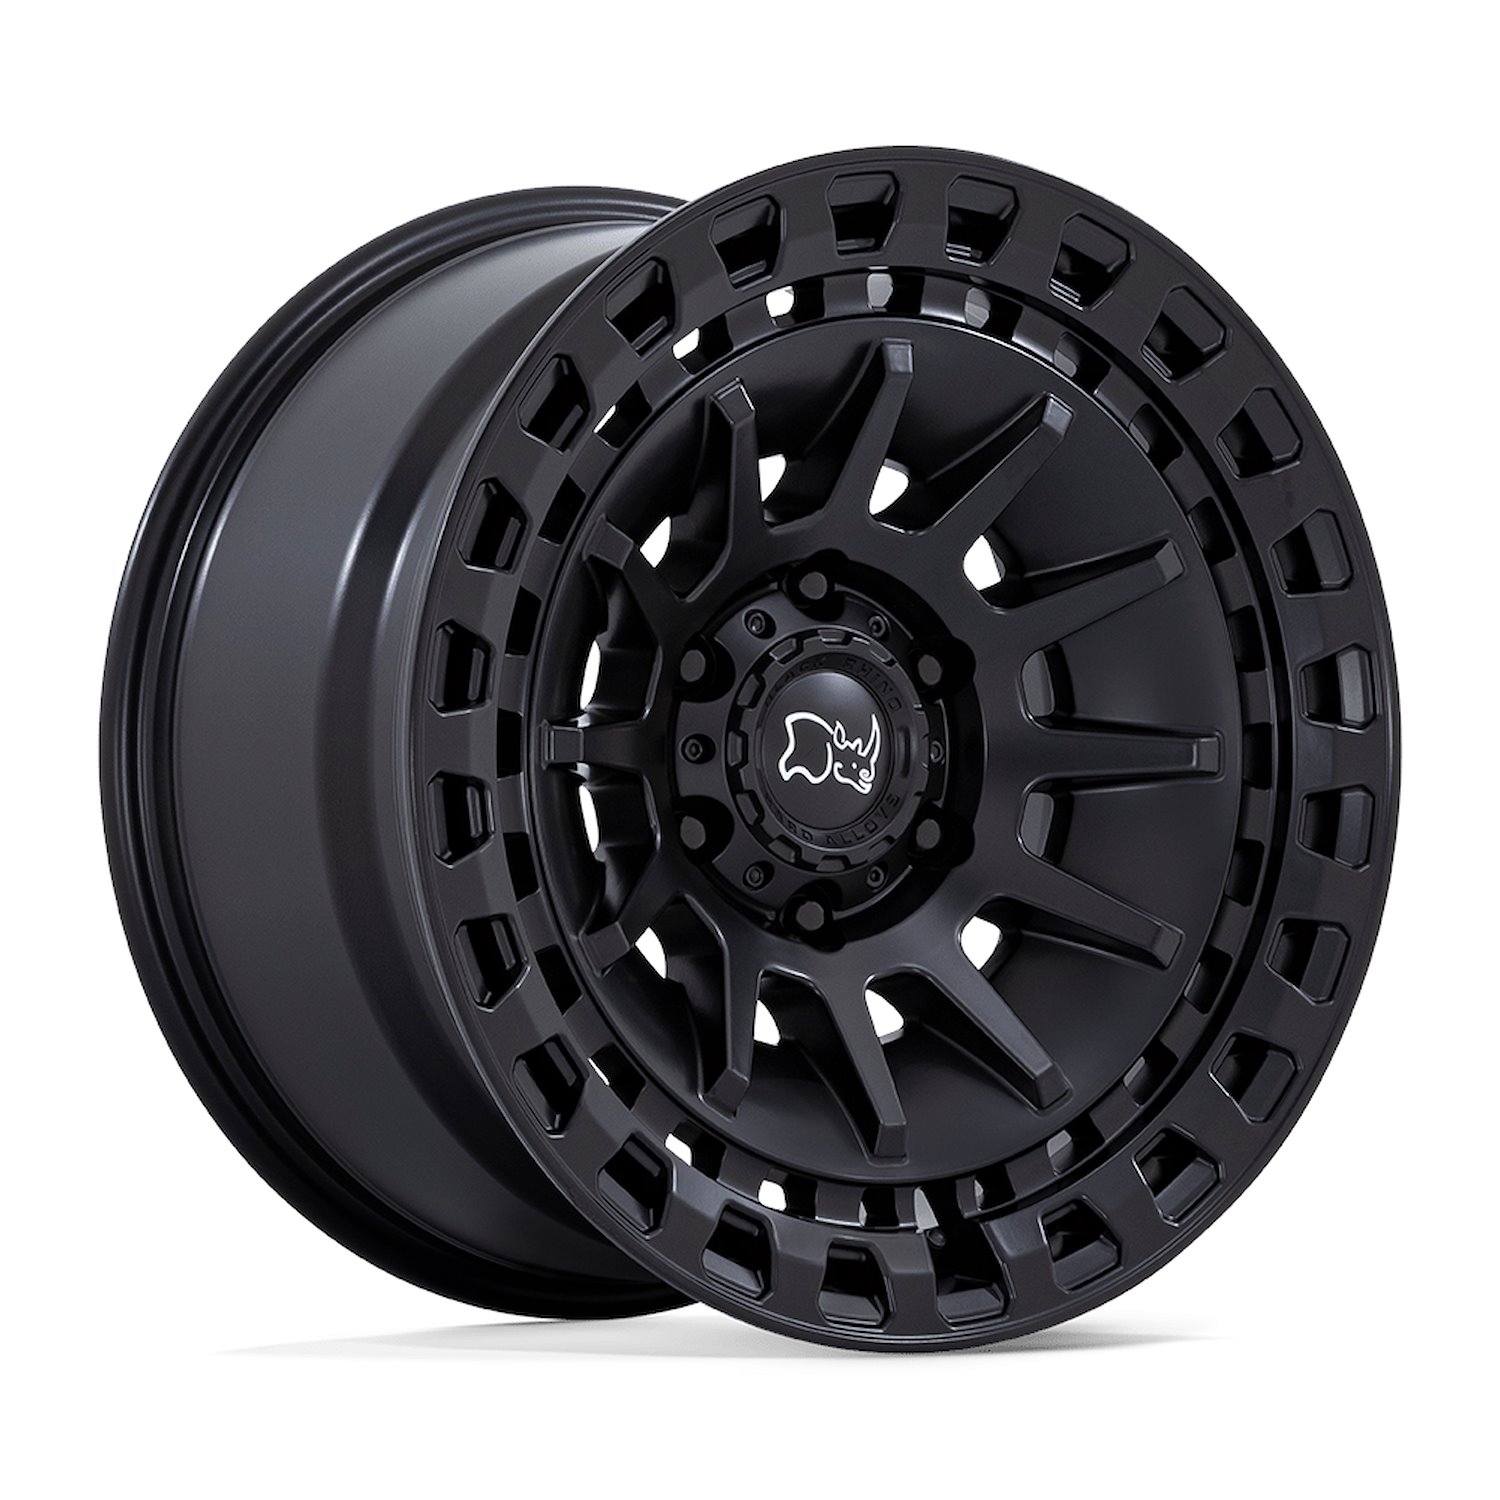 BR009MX18906800 BARRAGE Wheel [Size: 18" x 9"] Matte Black